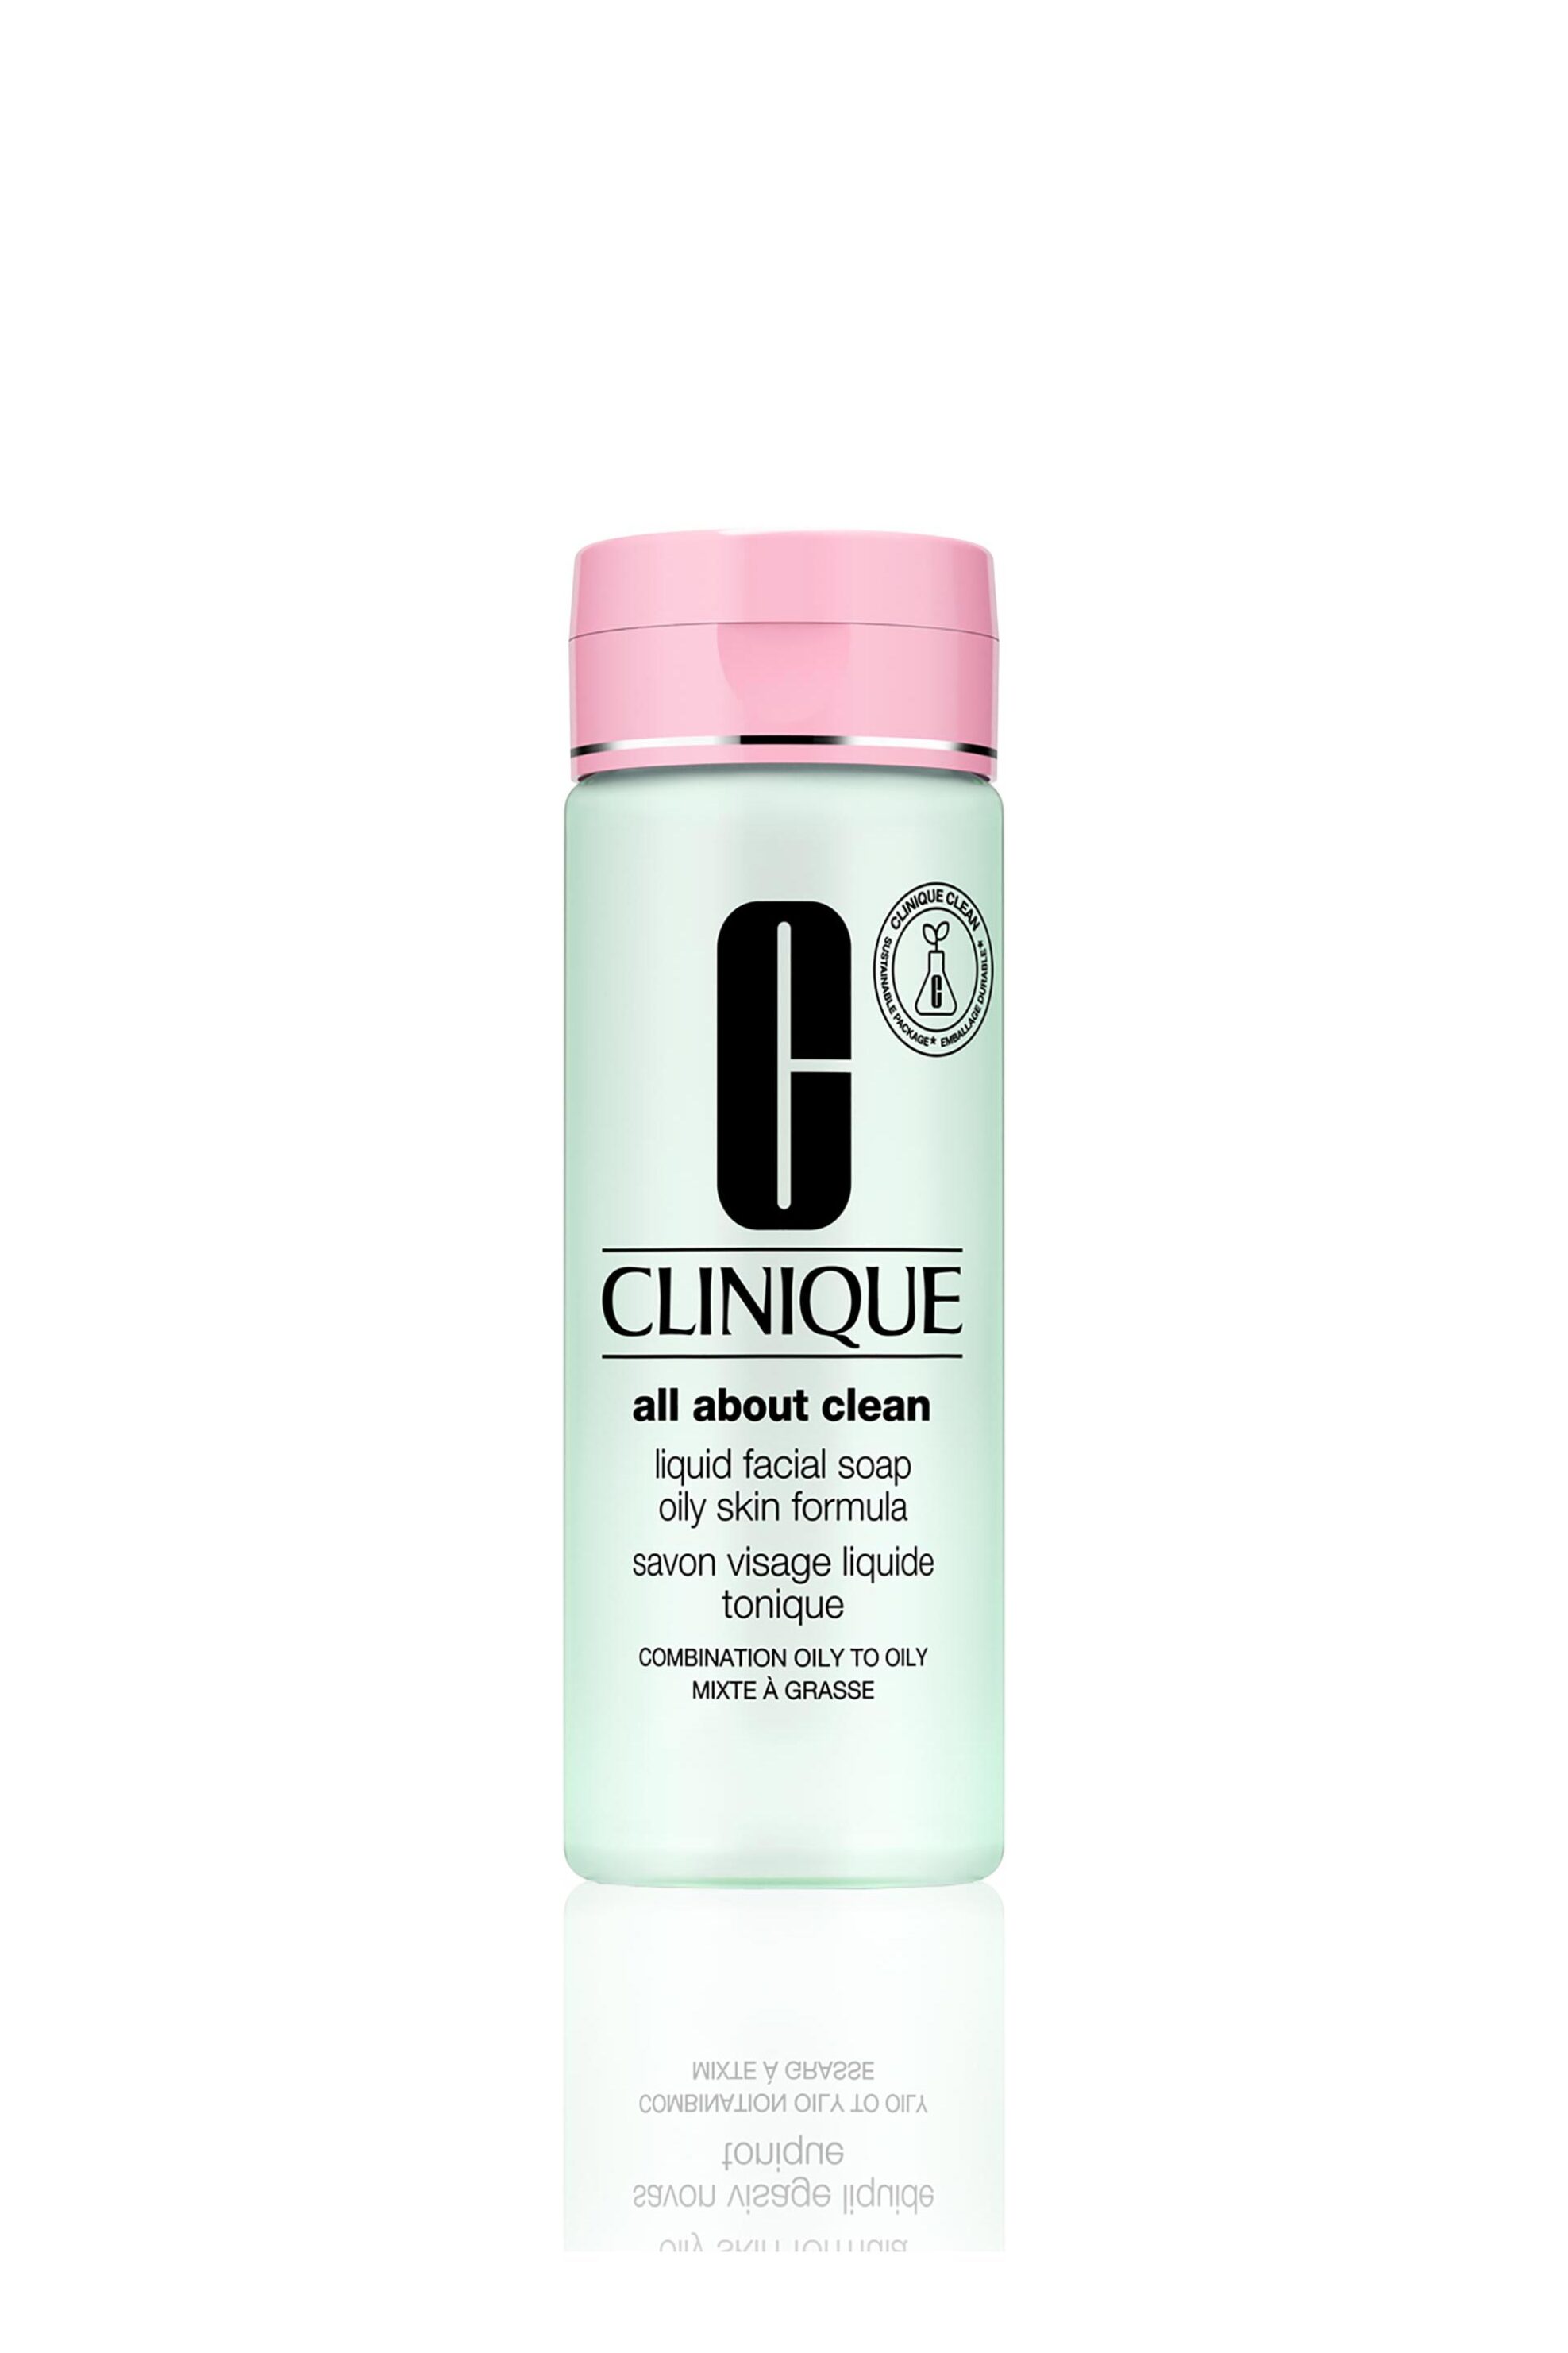 Clinique Liquid Facial Soap Oily Skin Formula 200 ml - 6F39010000 980207500091